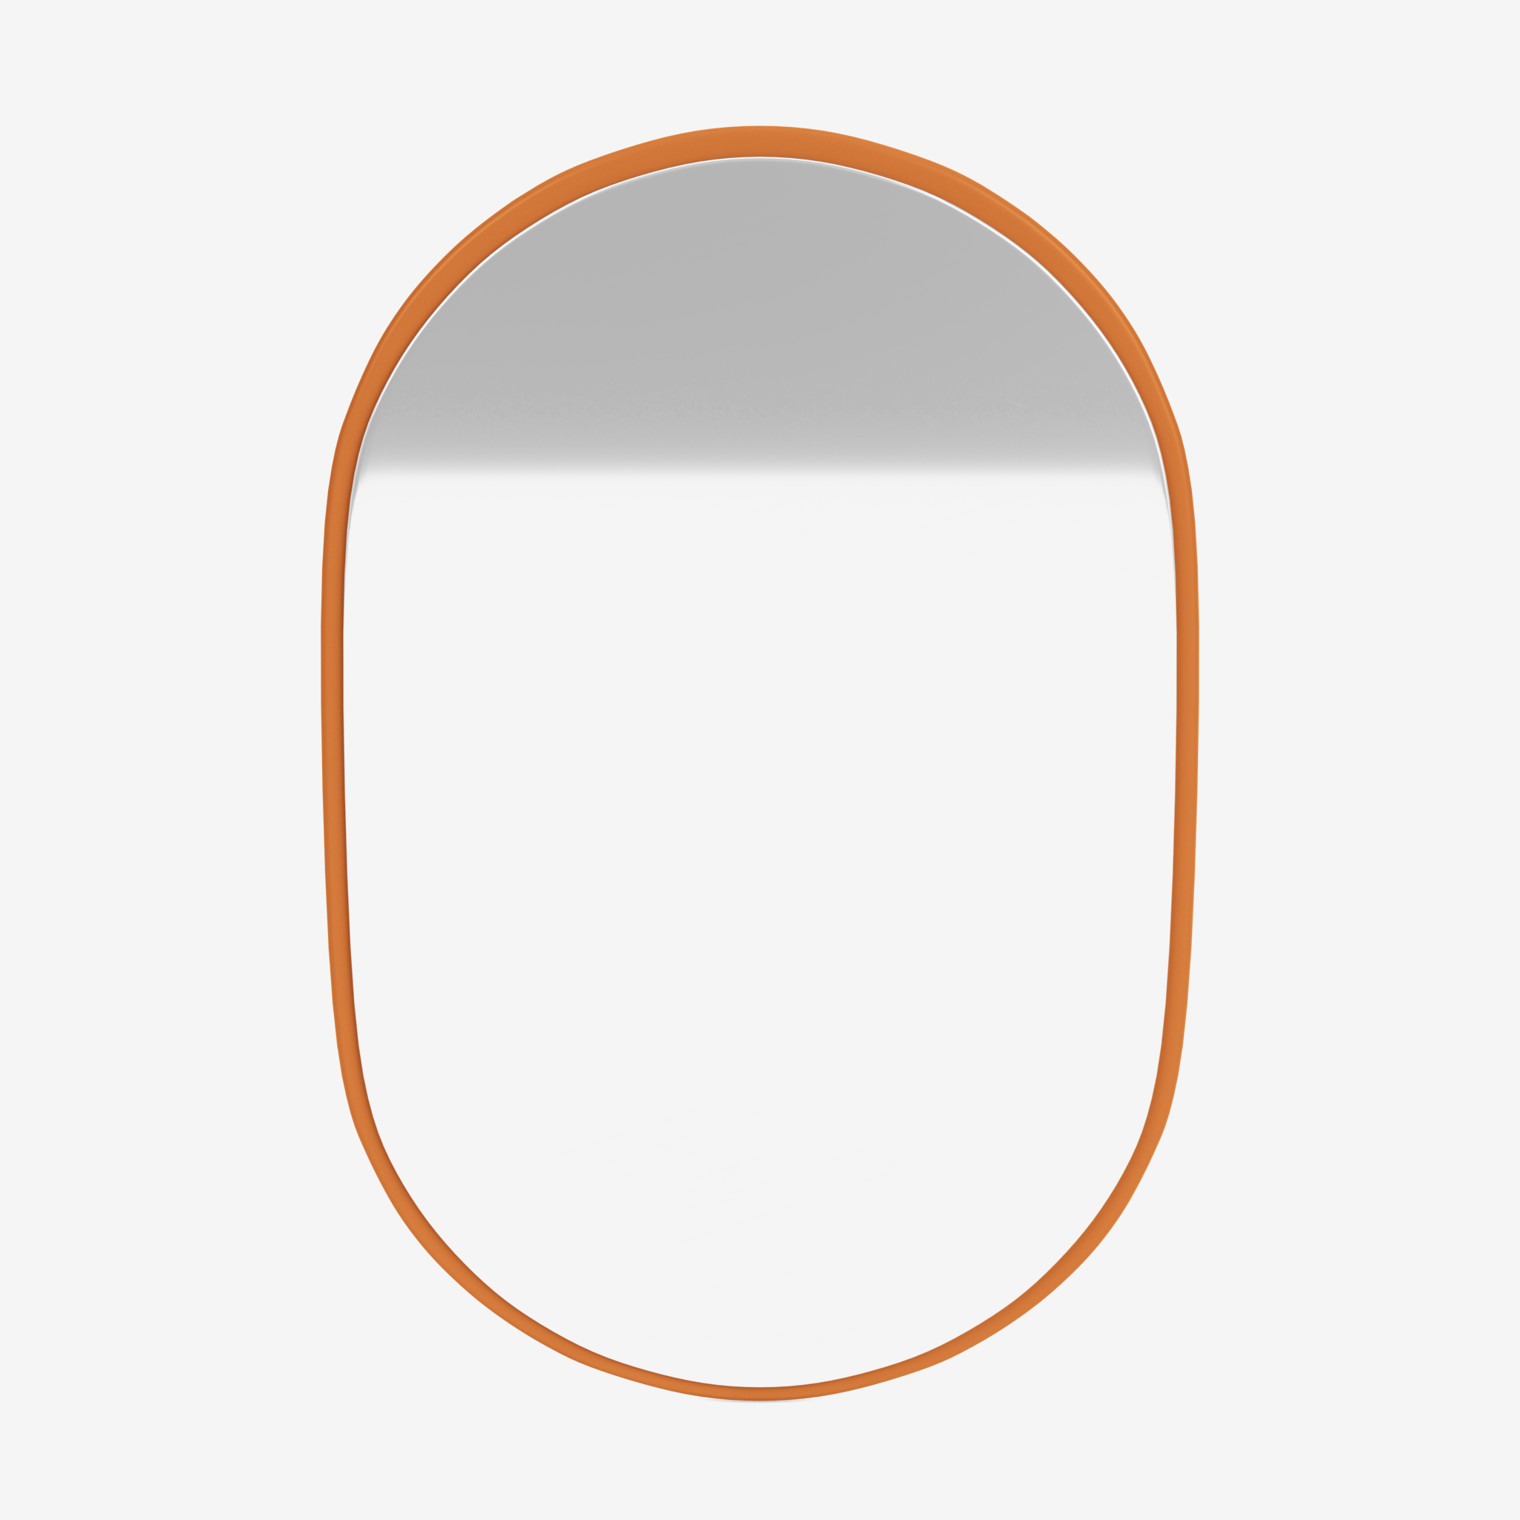 LOOK oval mirror